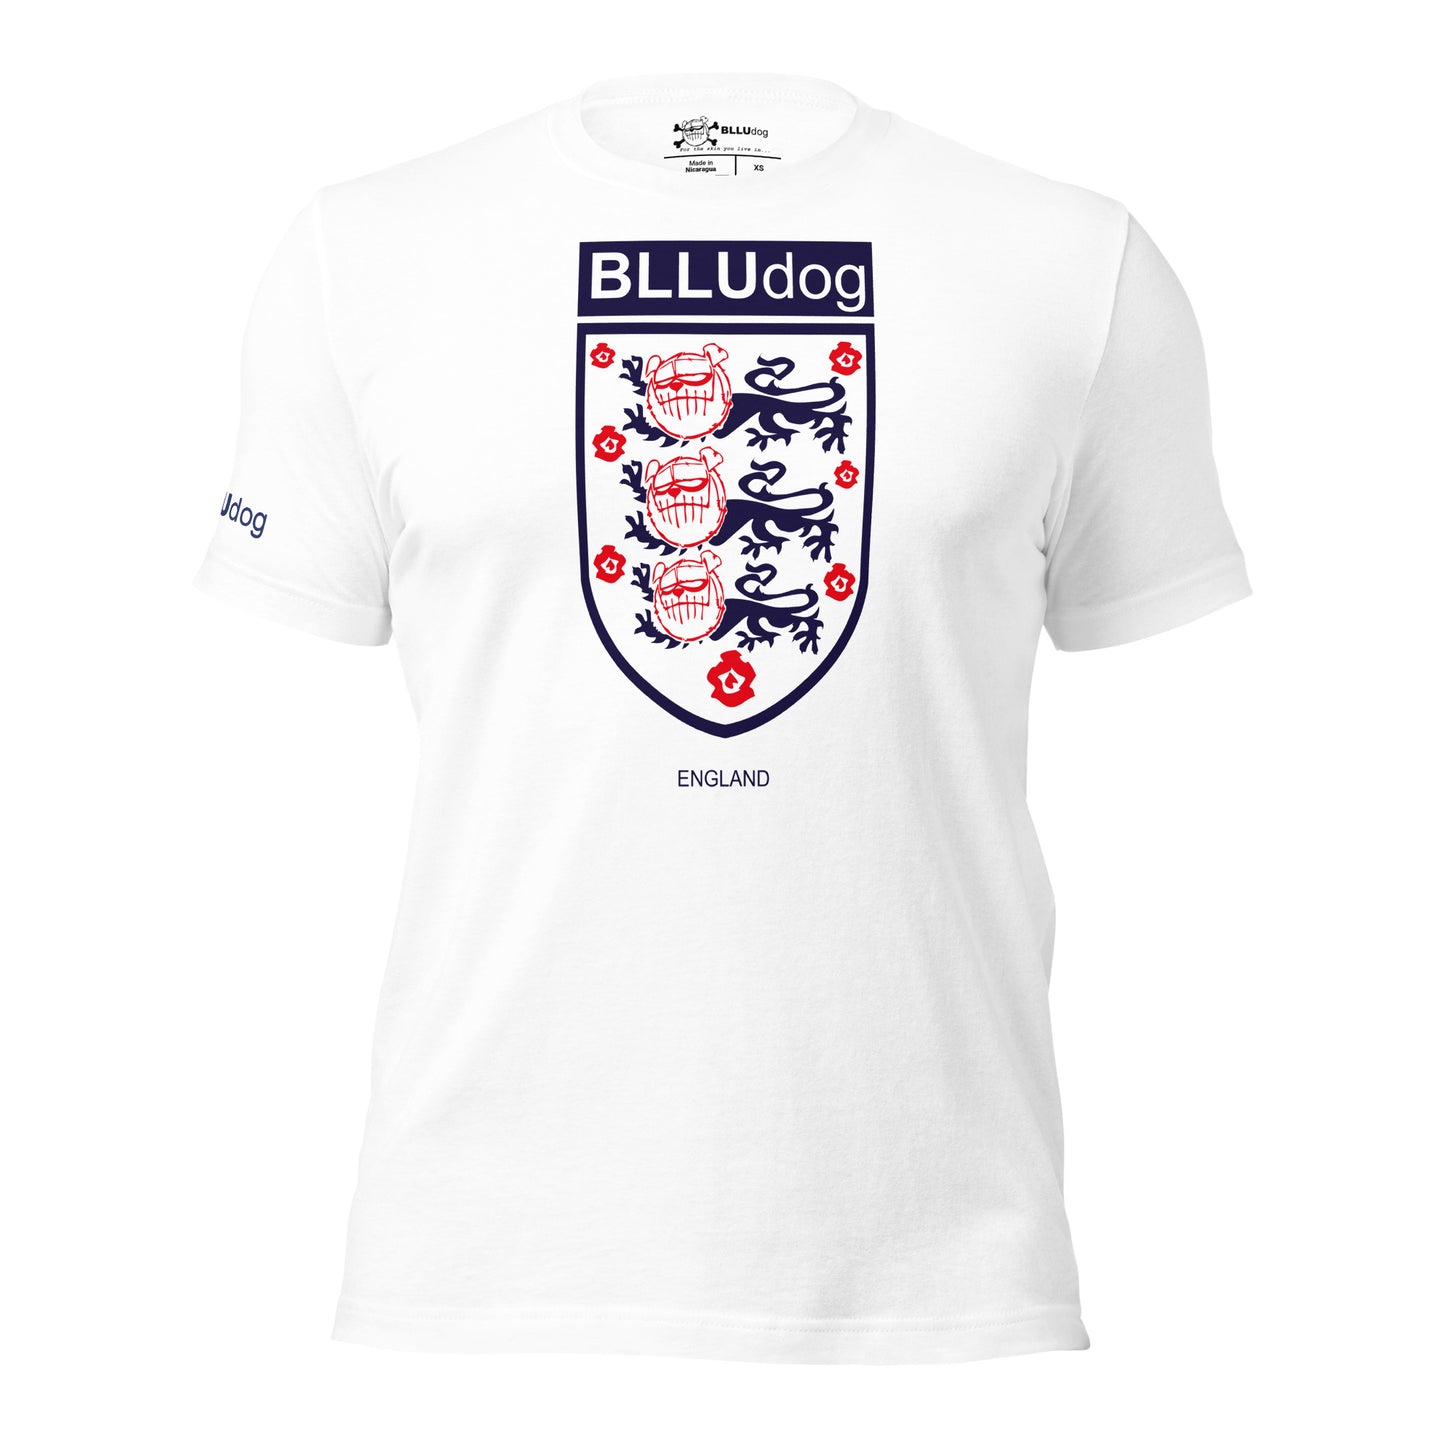 BLLUdog 'England 3 Lions' Tee